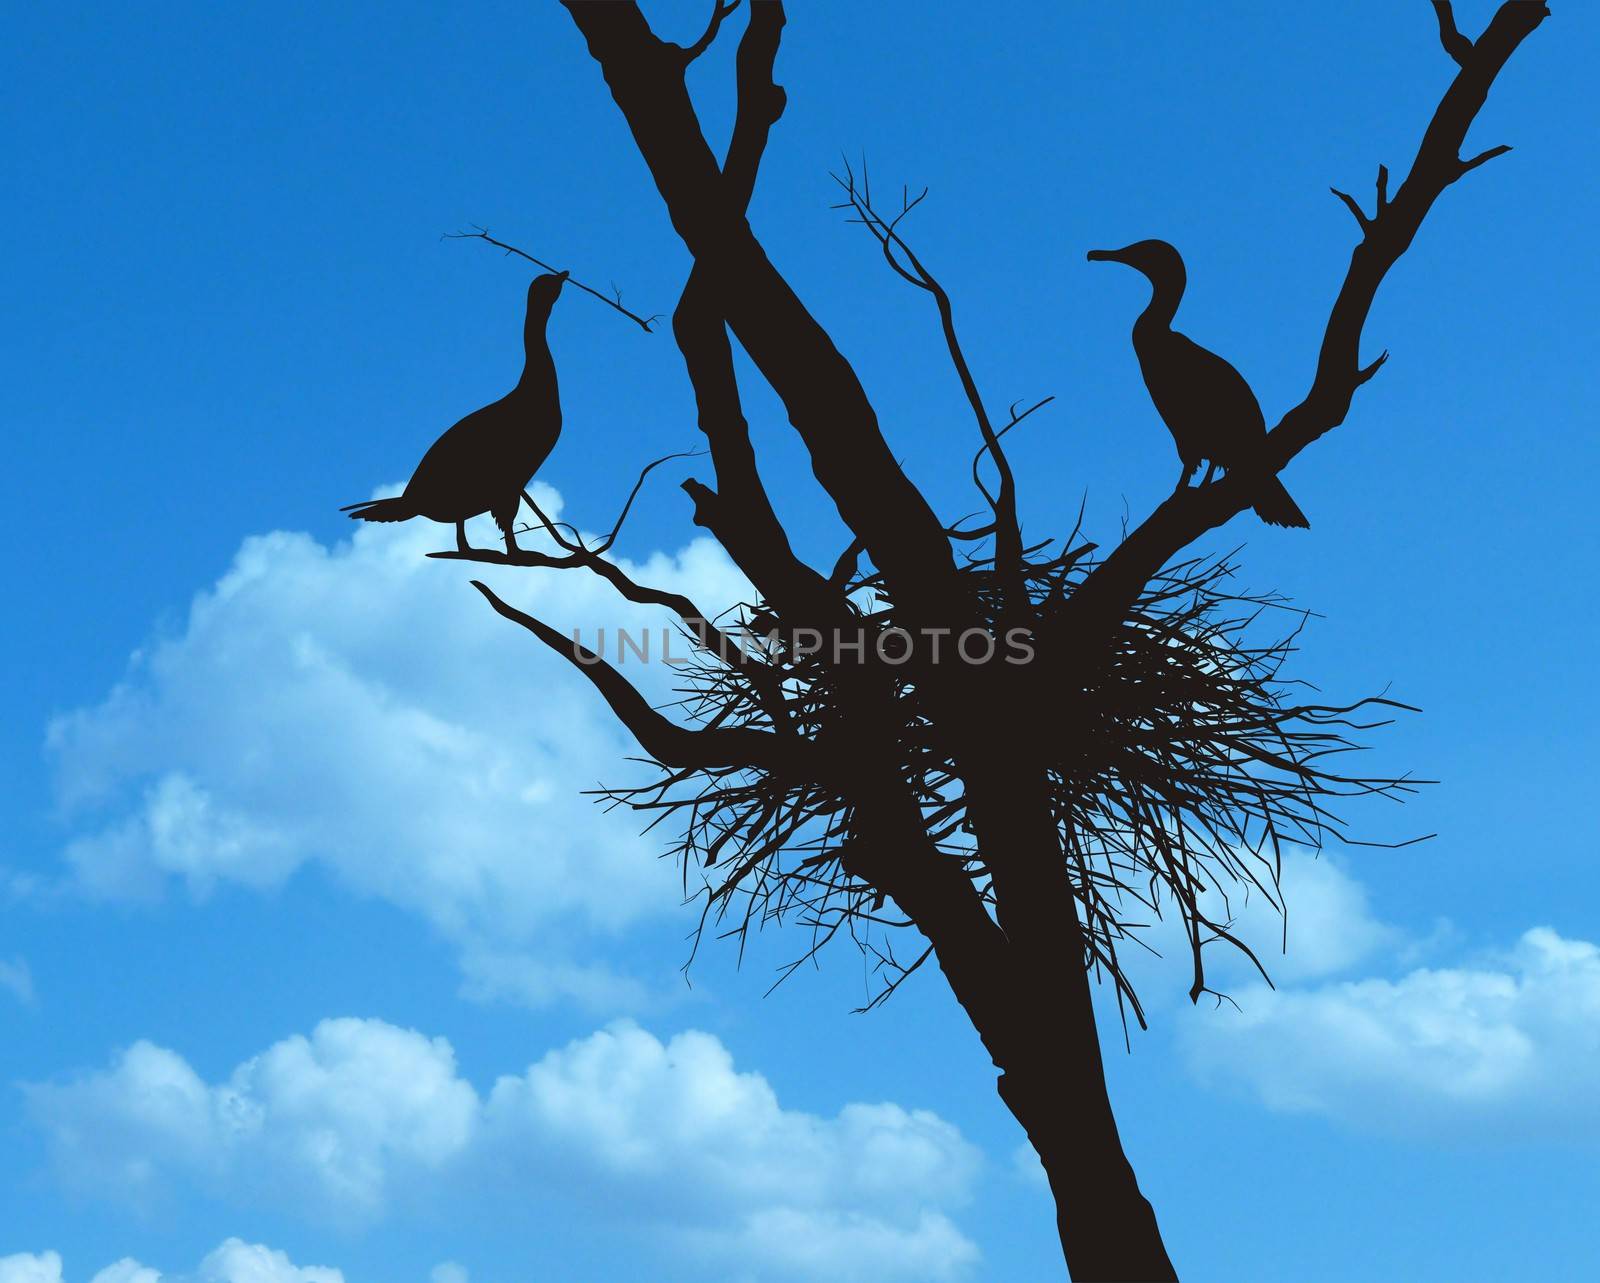 Cormorant nest by ard1